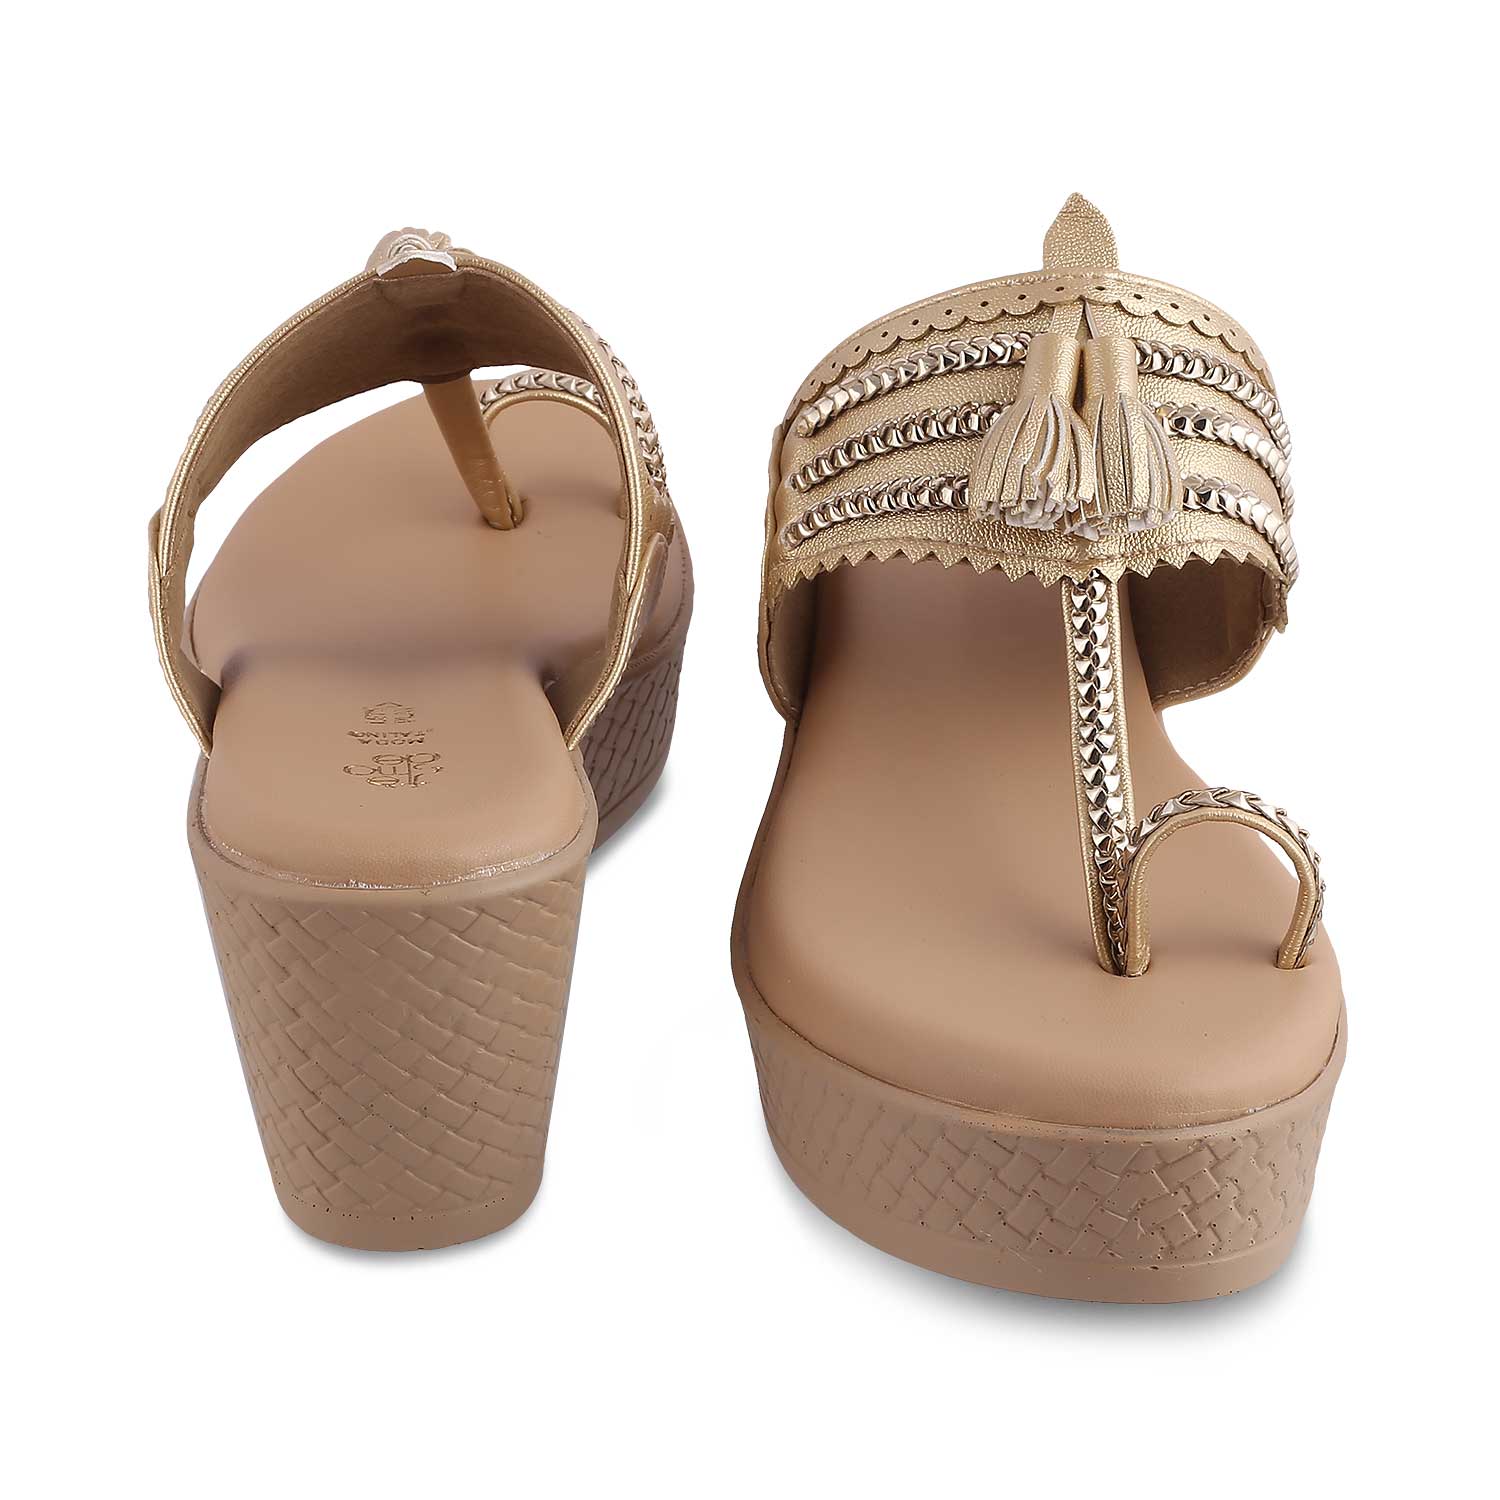 The Makol Gold Women's Dress Wedge Sandals Tresmode